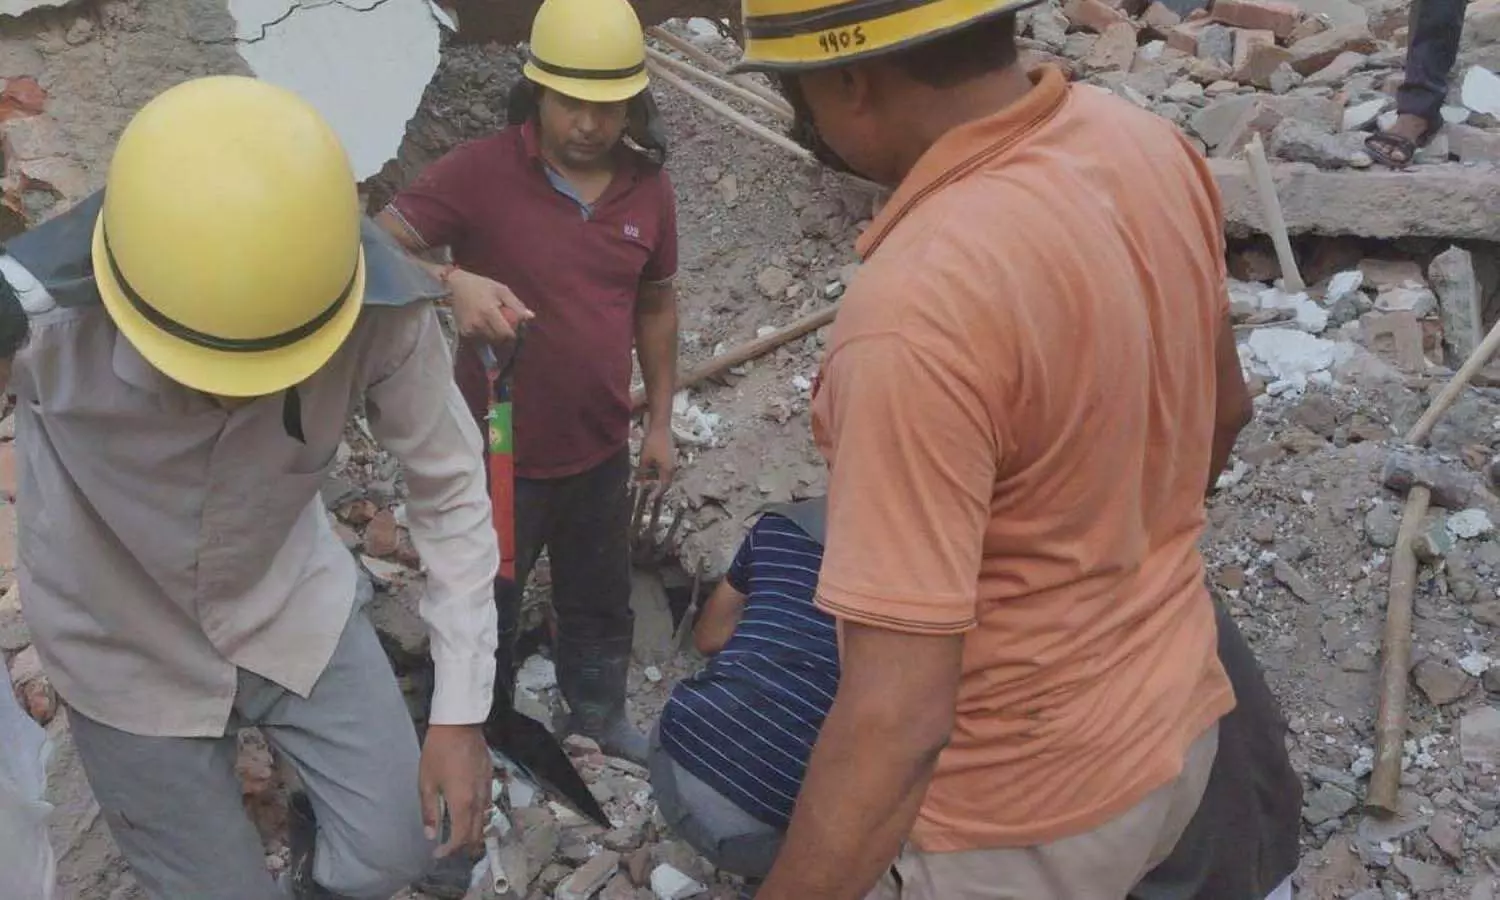 Major accident during demolition of building in Gurugram, 3 laborers buried under debris